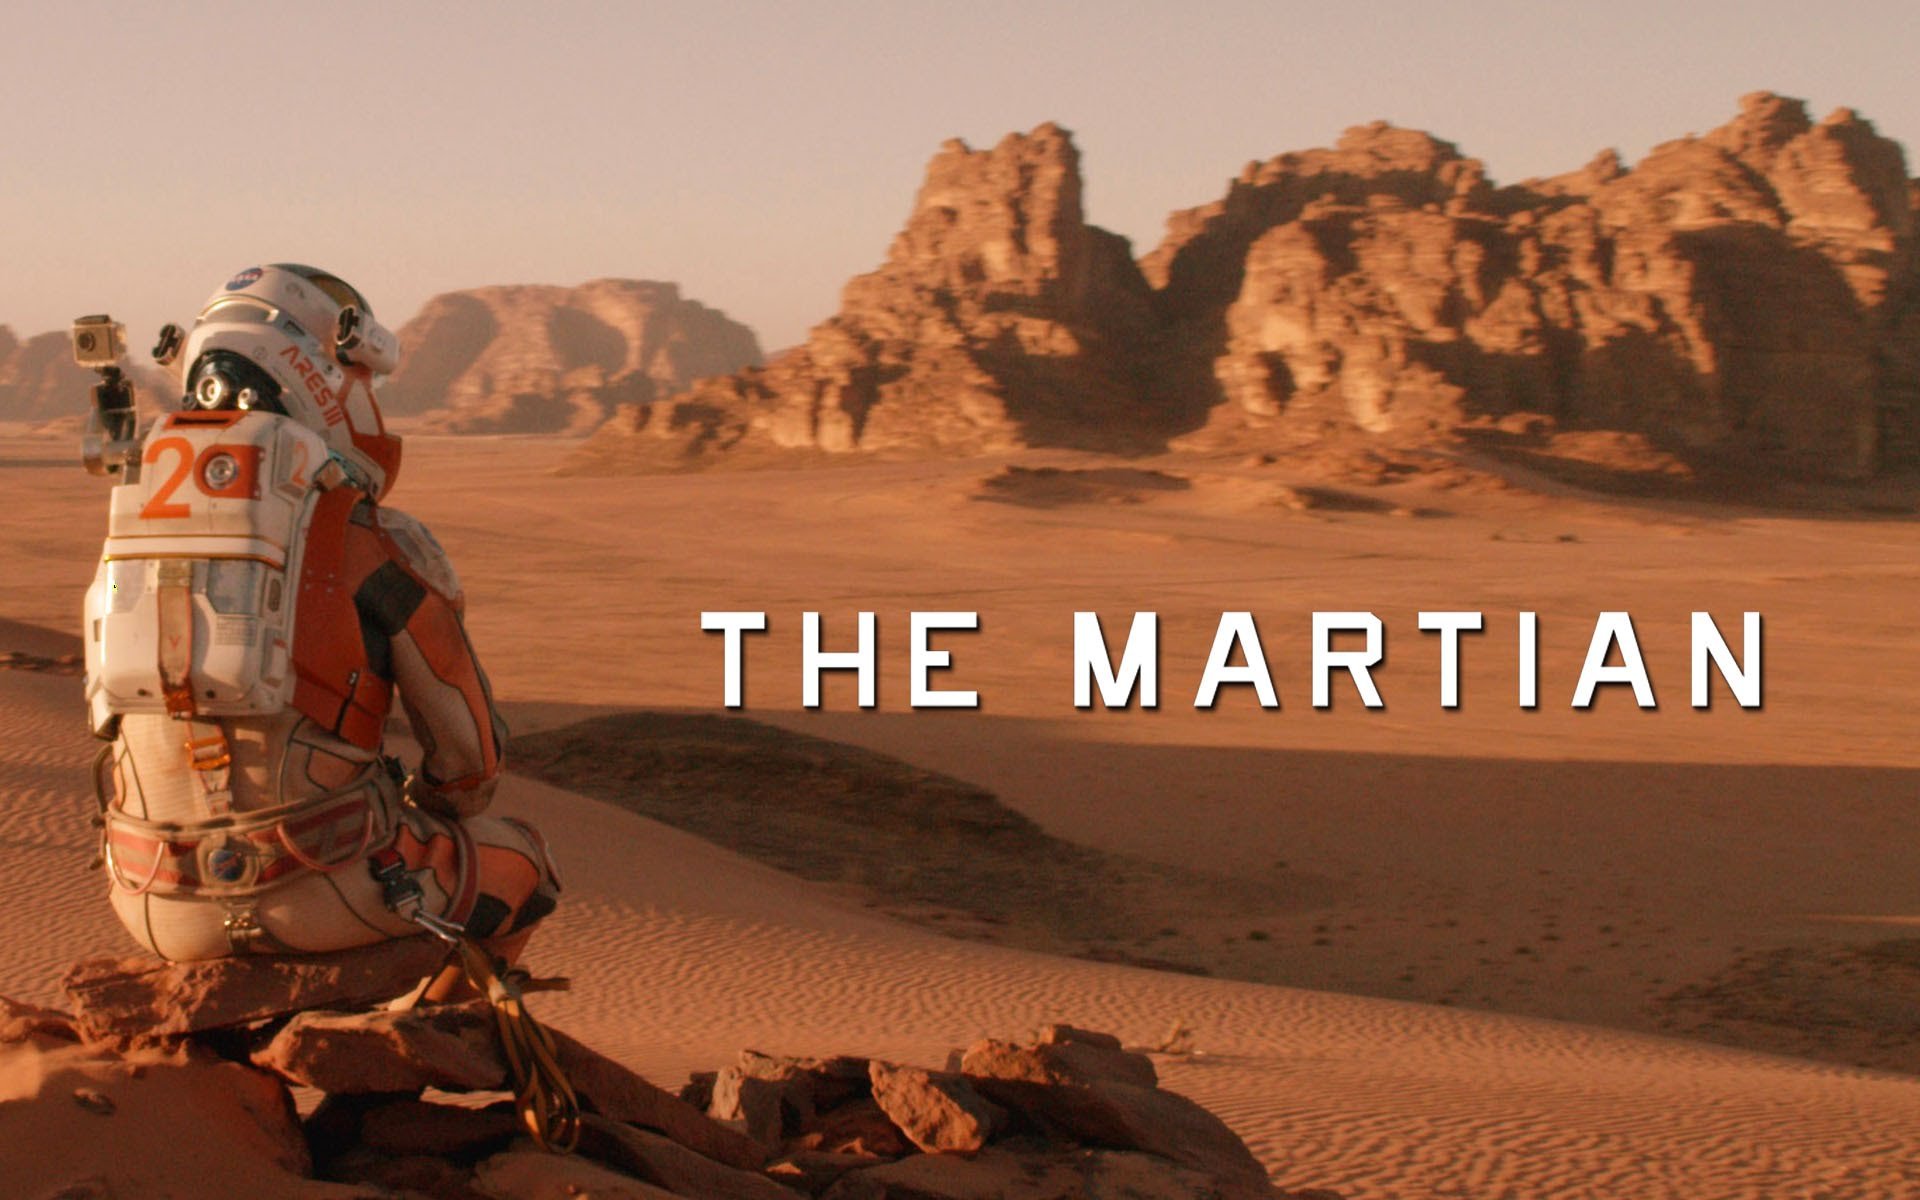 martian, Sci fi, Futuristic, Astronaut, Mars, 1martian, Adventure, Drama, Damon, Poster Wallpaper